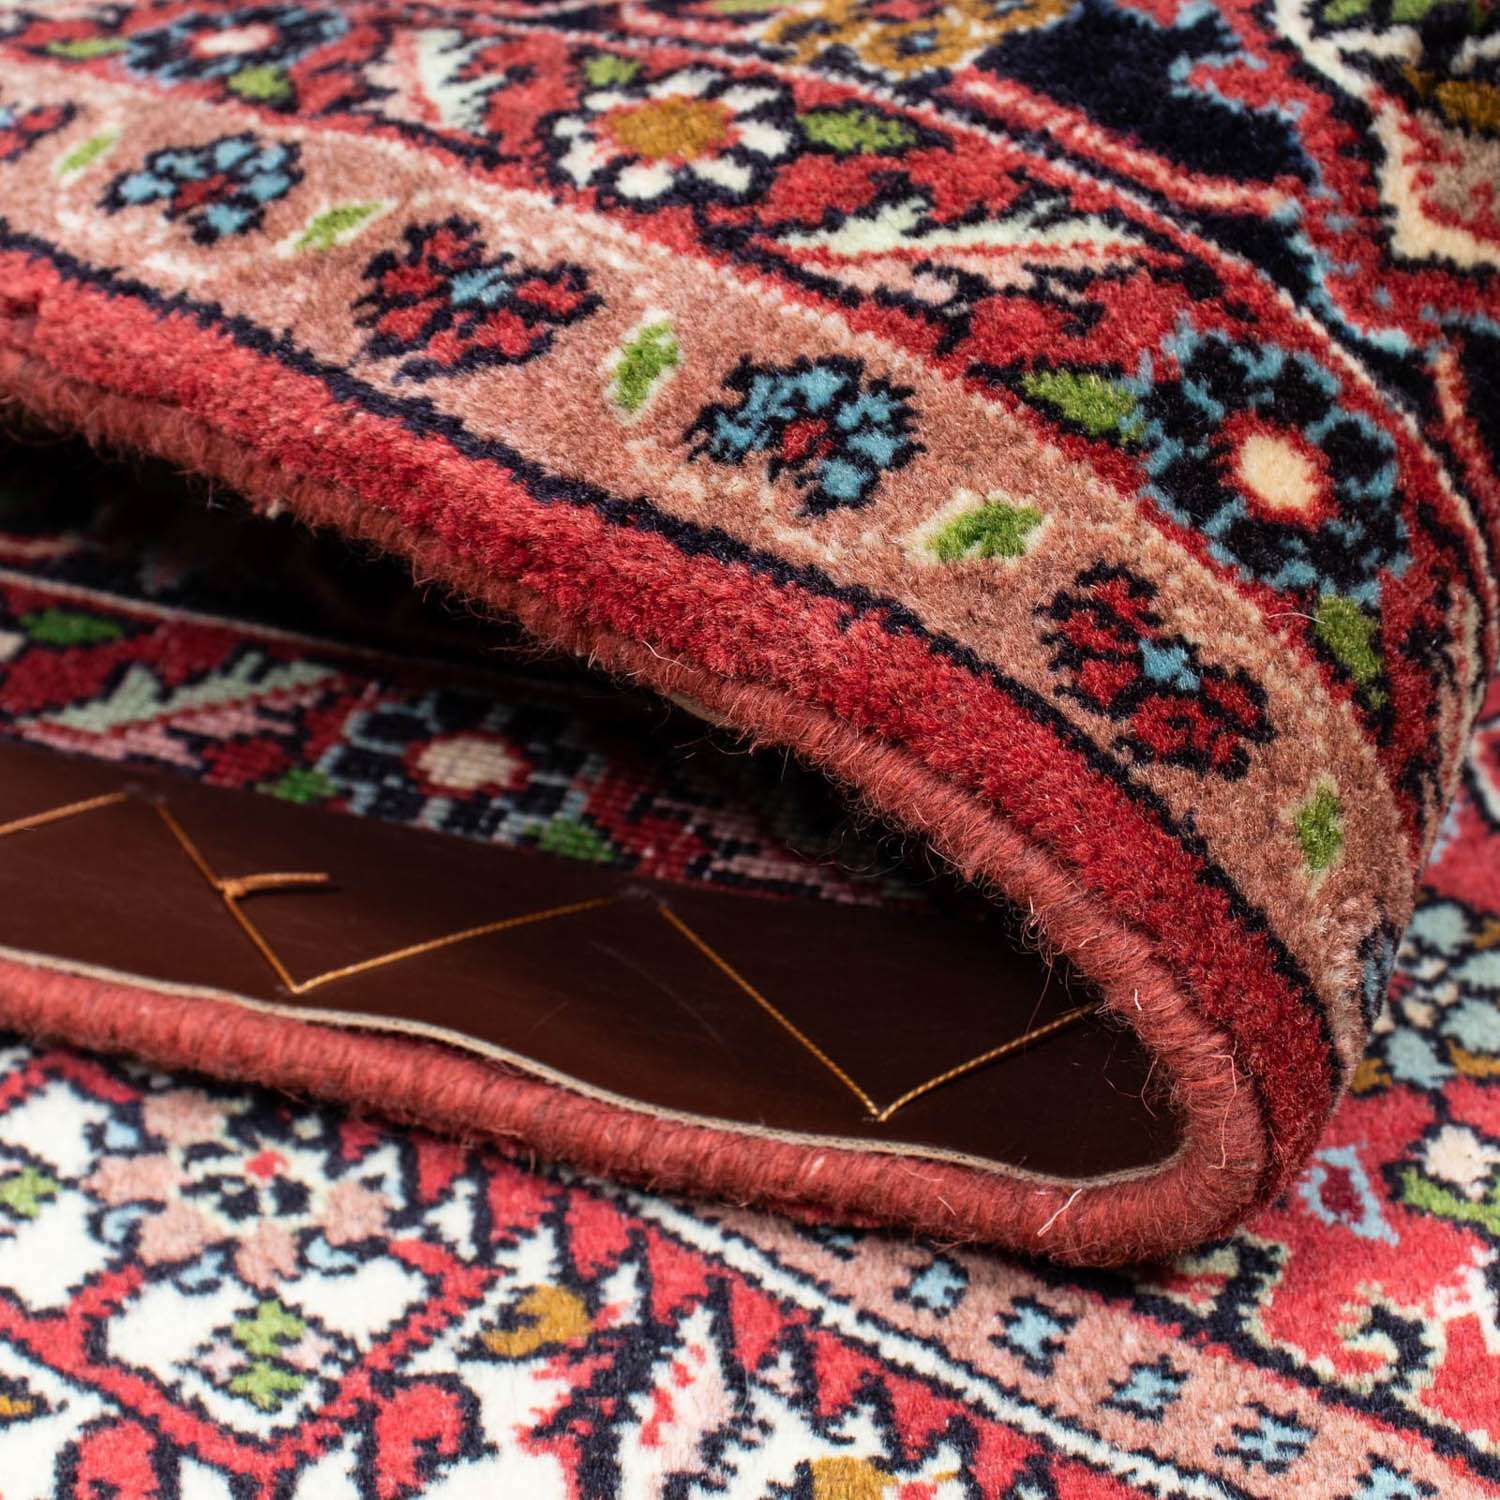 Perzisch tapijt - Bijar - 224 x 141 cm - licht rood